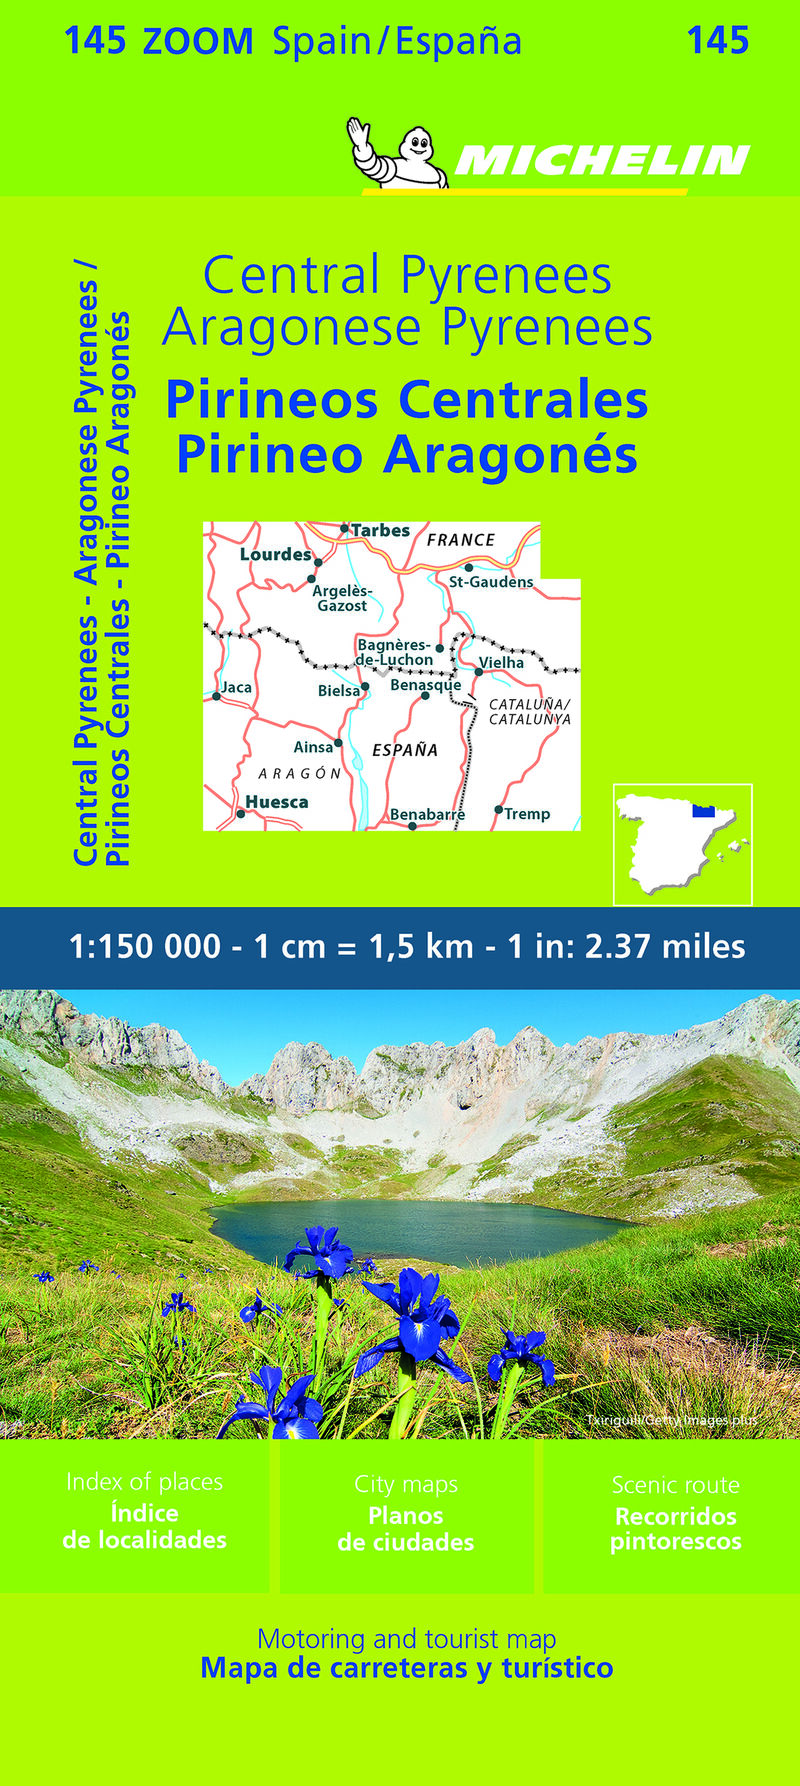 mapa zoom pirineos centrales, pirineo aragones 11145